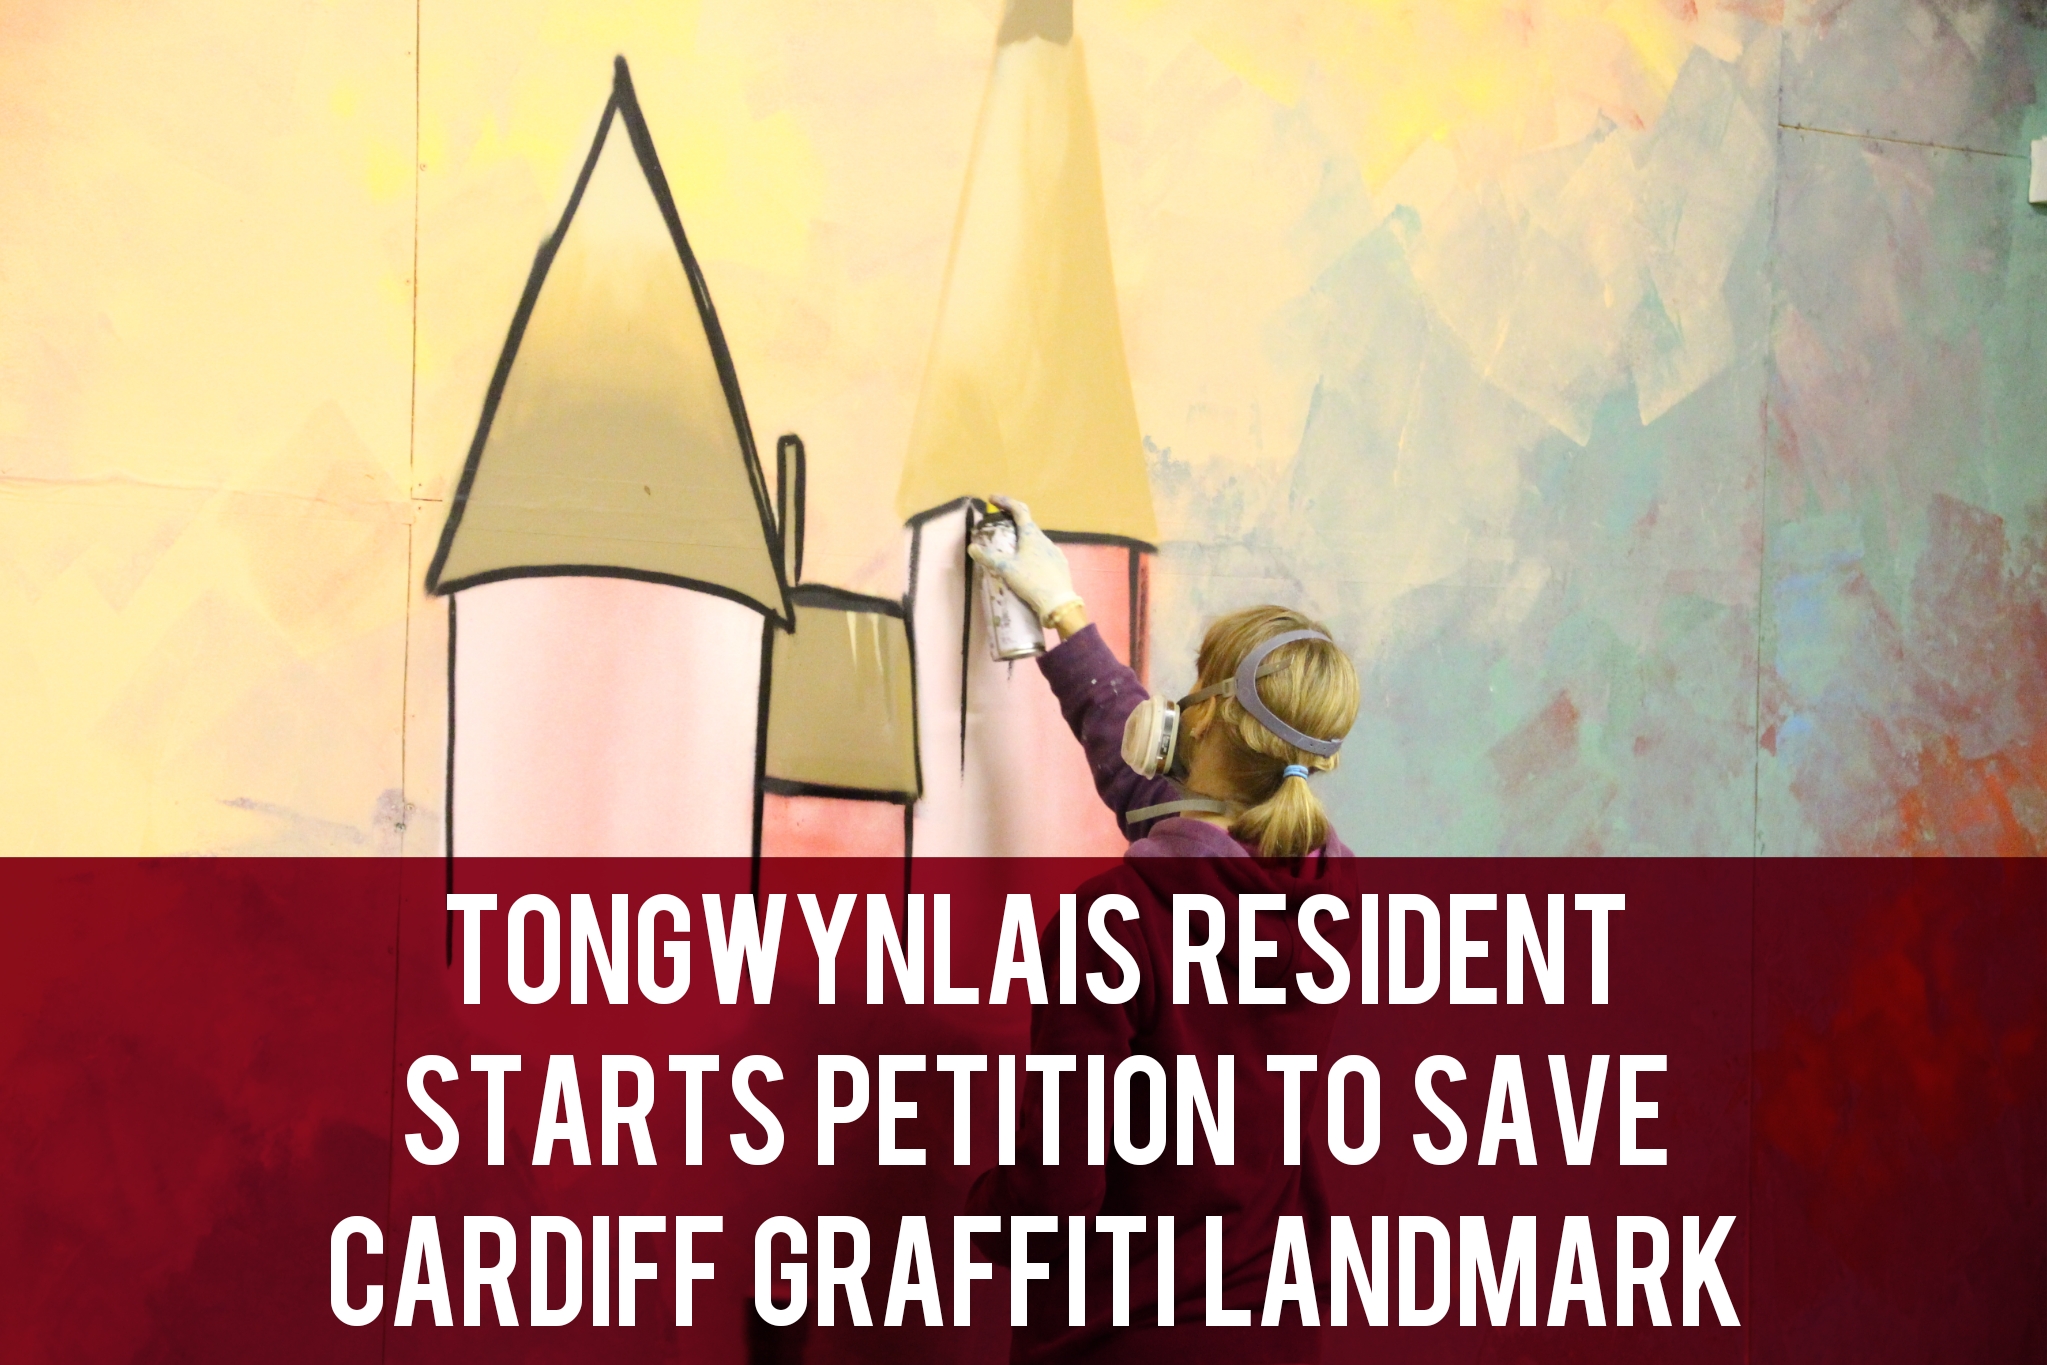 Tongwynlais resident graffiti petition header